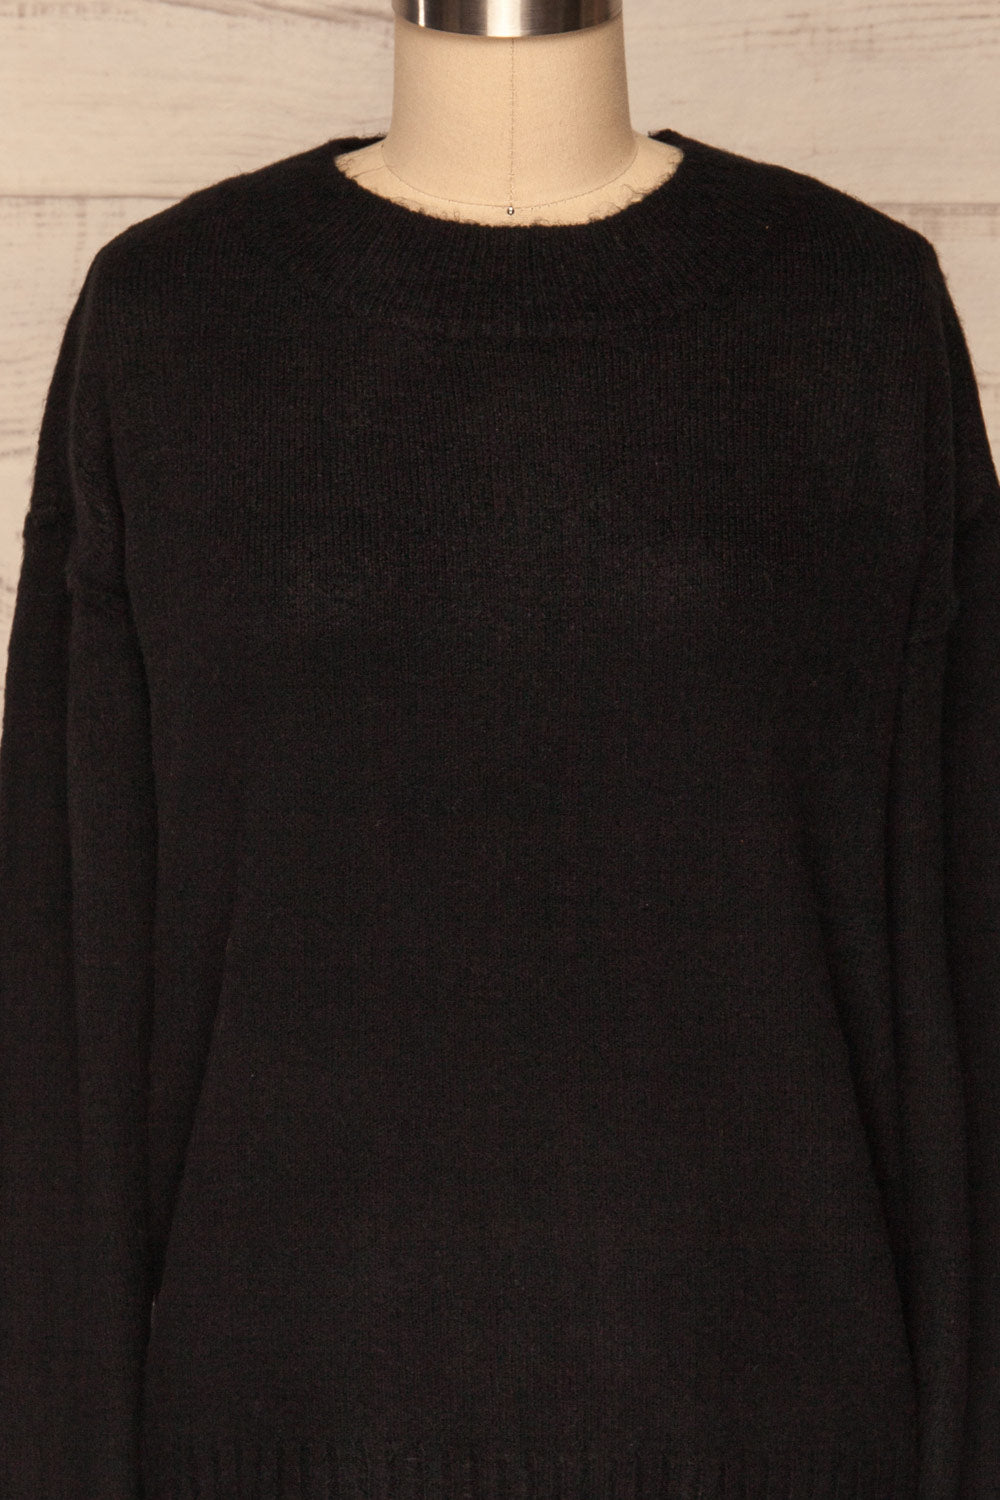 Gistel Black Soft Knit Sweater | La Petite Garçonne front close-up